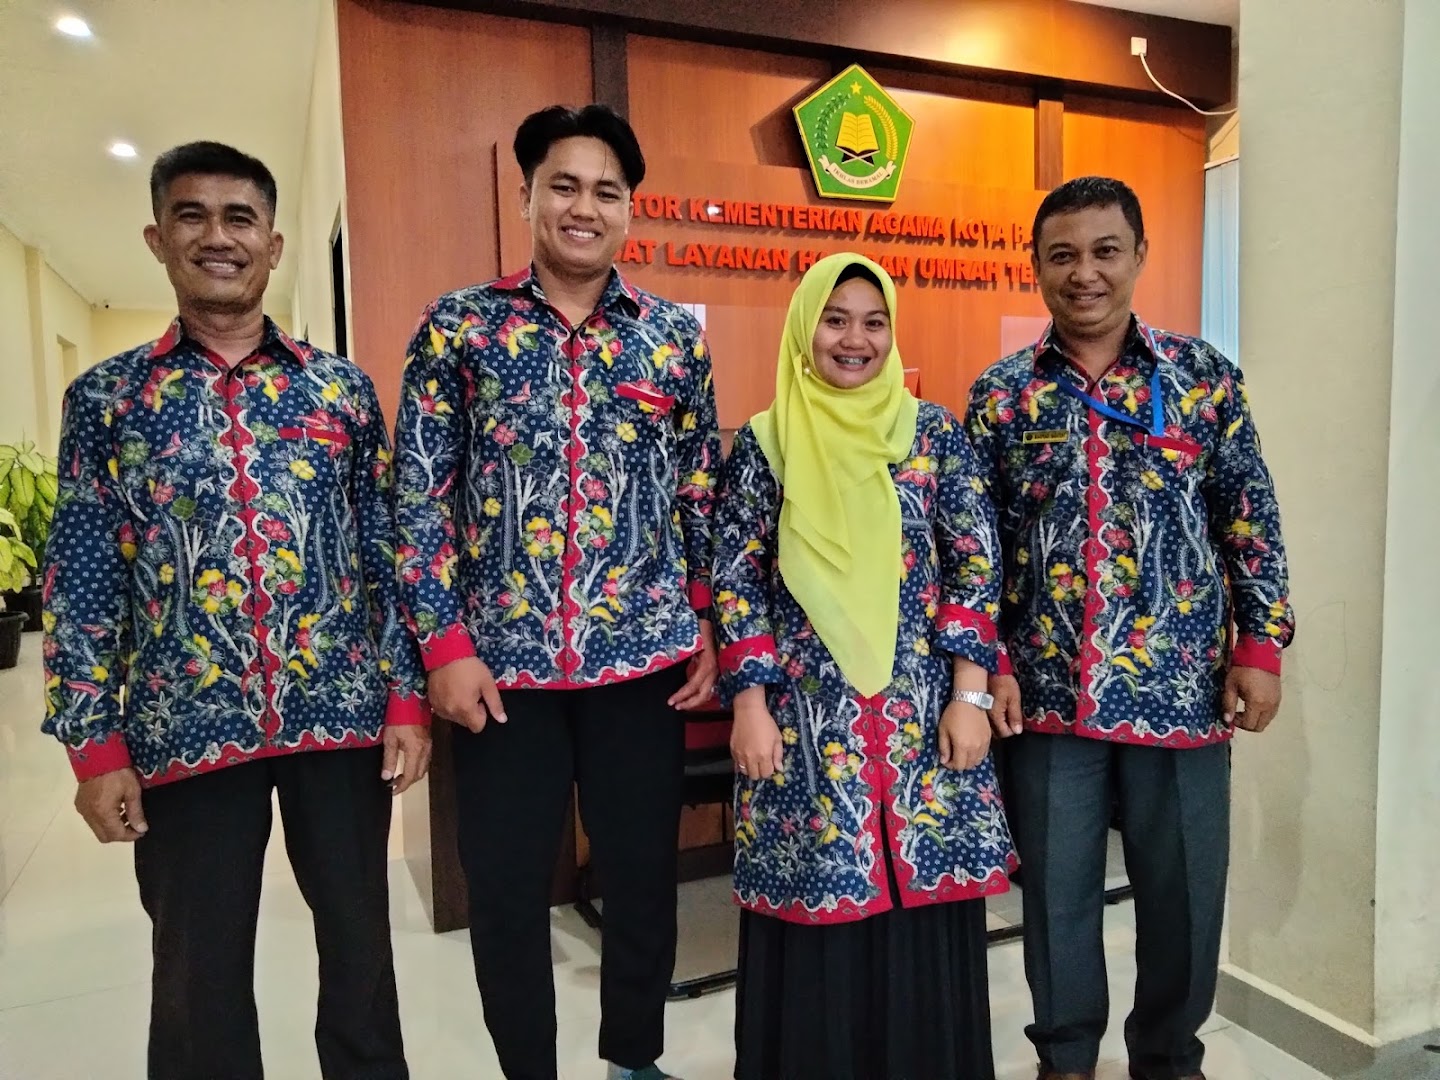 Gambar Pusat Pelayanan Haji Dan Umrah Terpadu Kantor Kementerian Agama Kota Padang